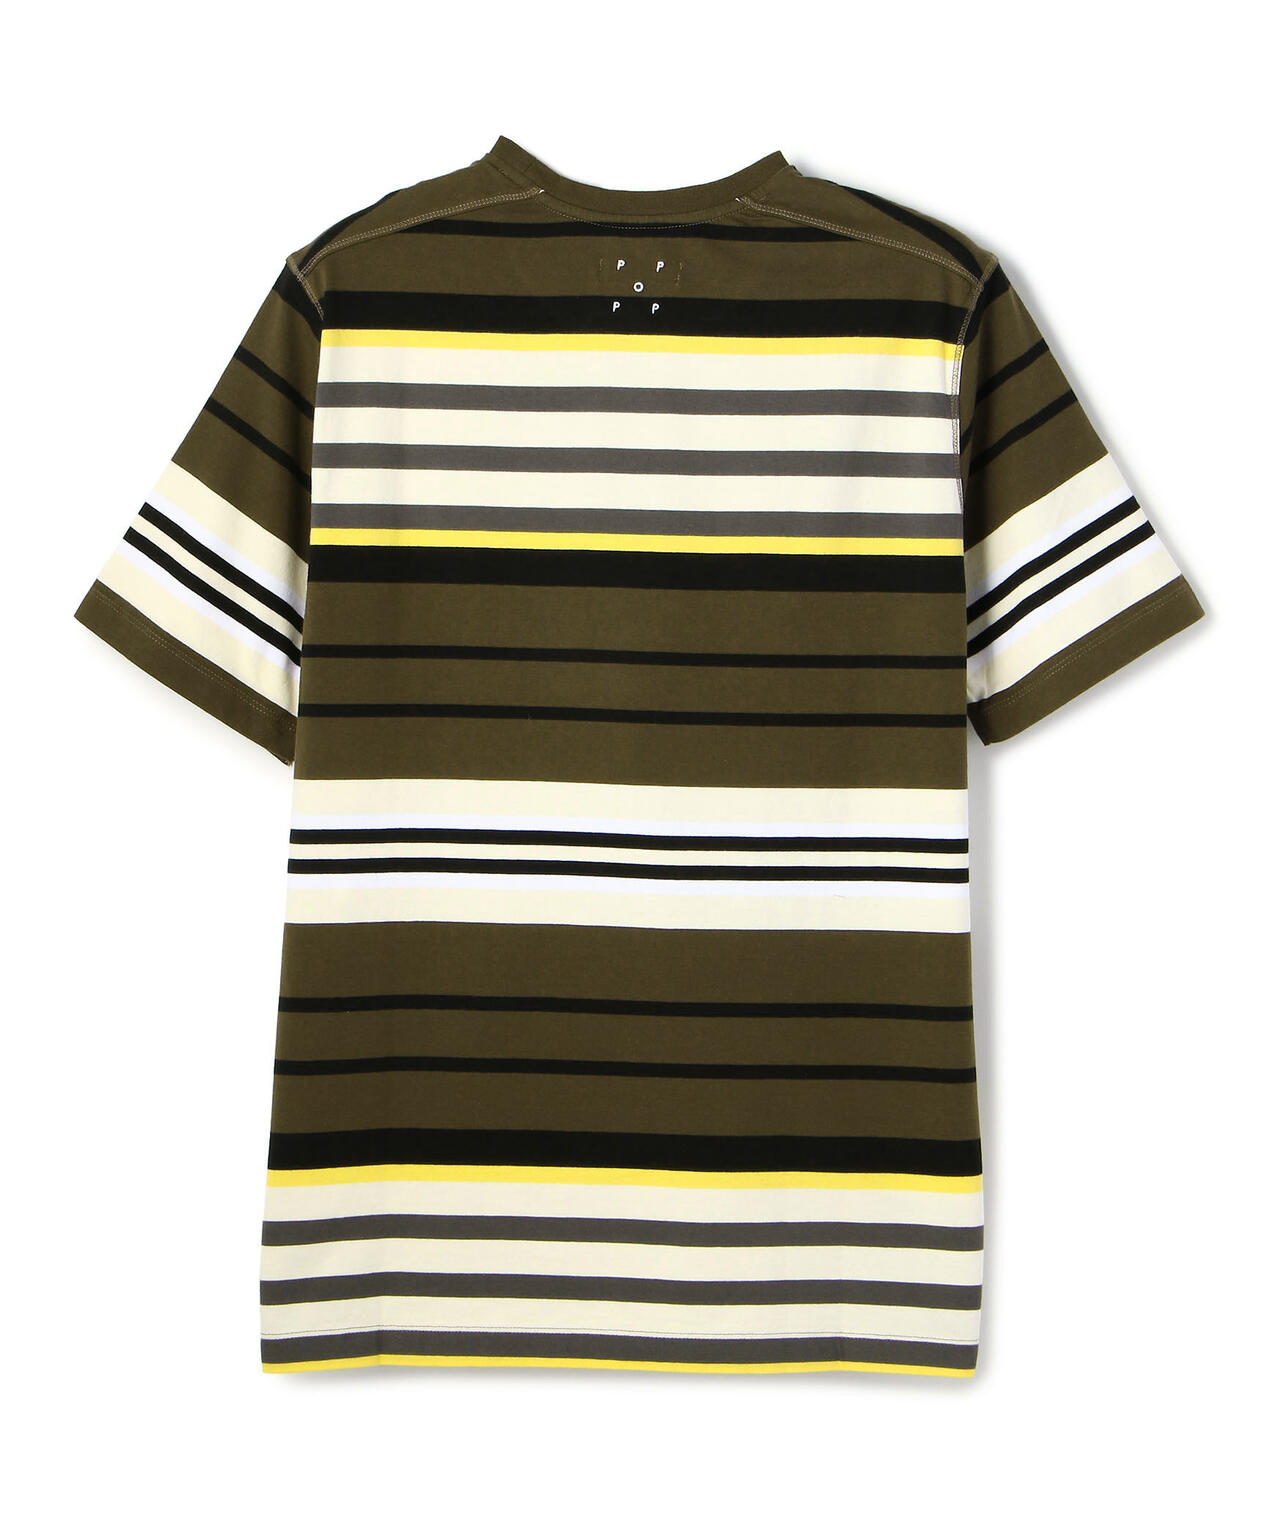 POP TRADING COMPANY/ポップトレーディングカンパニー/striped pocket t-shirt